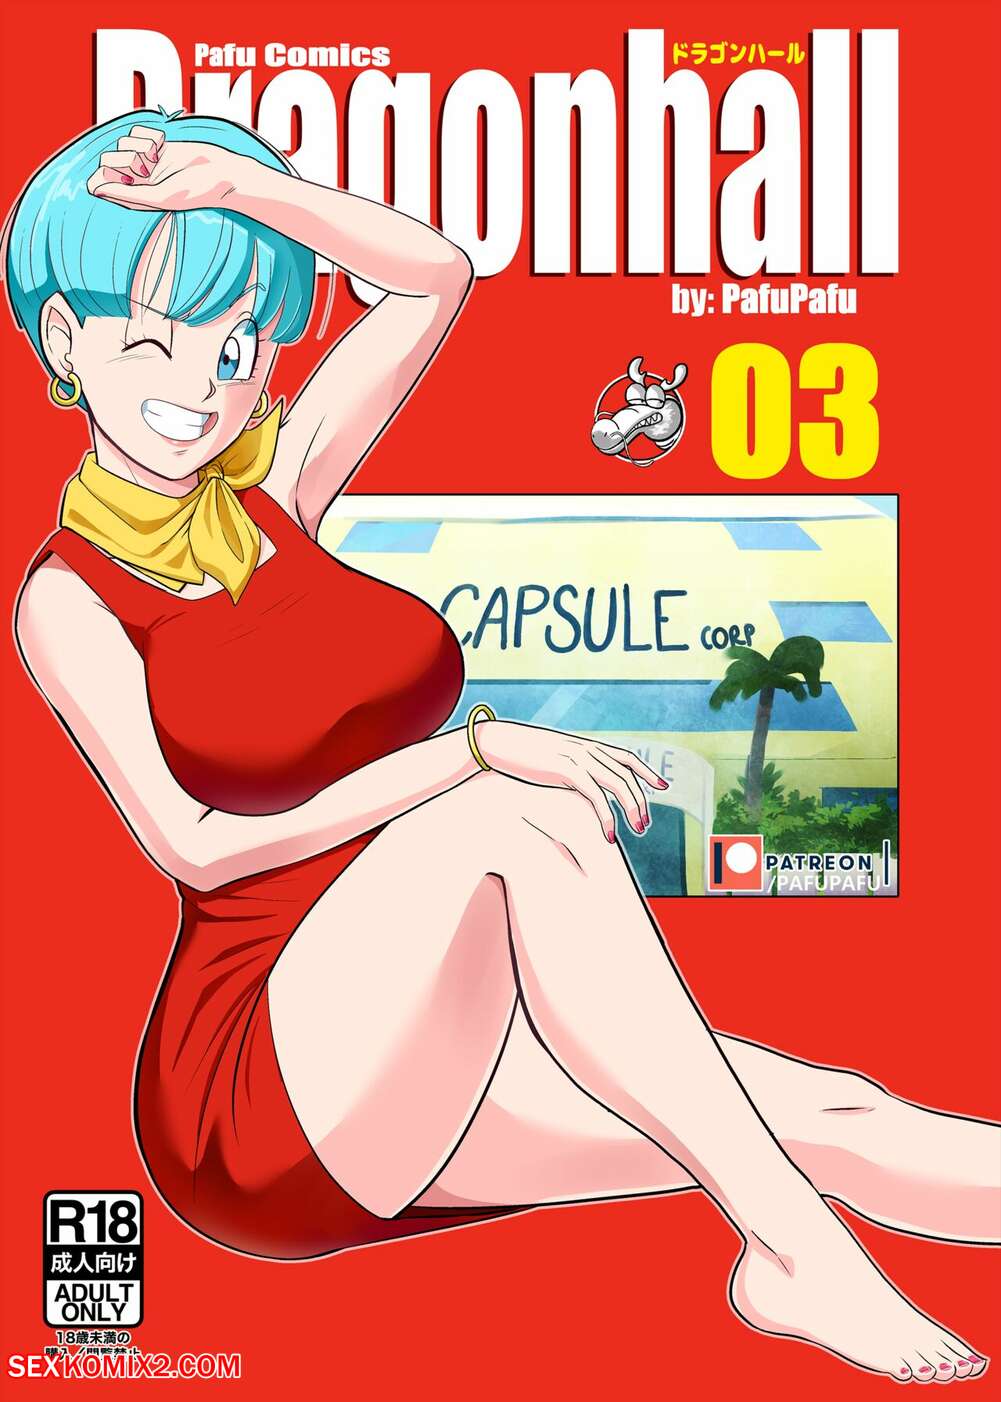 Bulma Xxx Porn - âœ…ï¸ Porn comic Gohan vs Bulma. Dragon Ball Z. PafuPafu Sex comic beauty MILF  was | Porn comics in English for adults only | sexkomix2.com